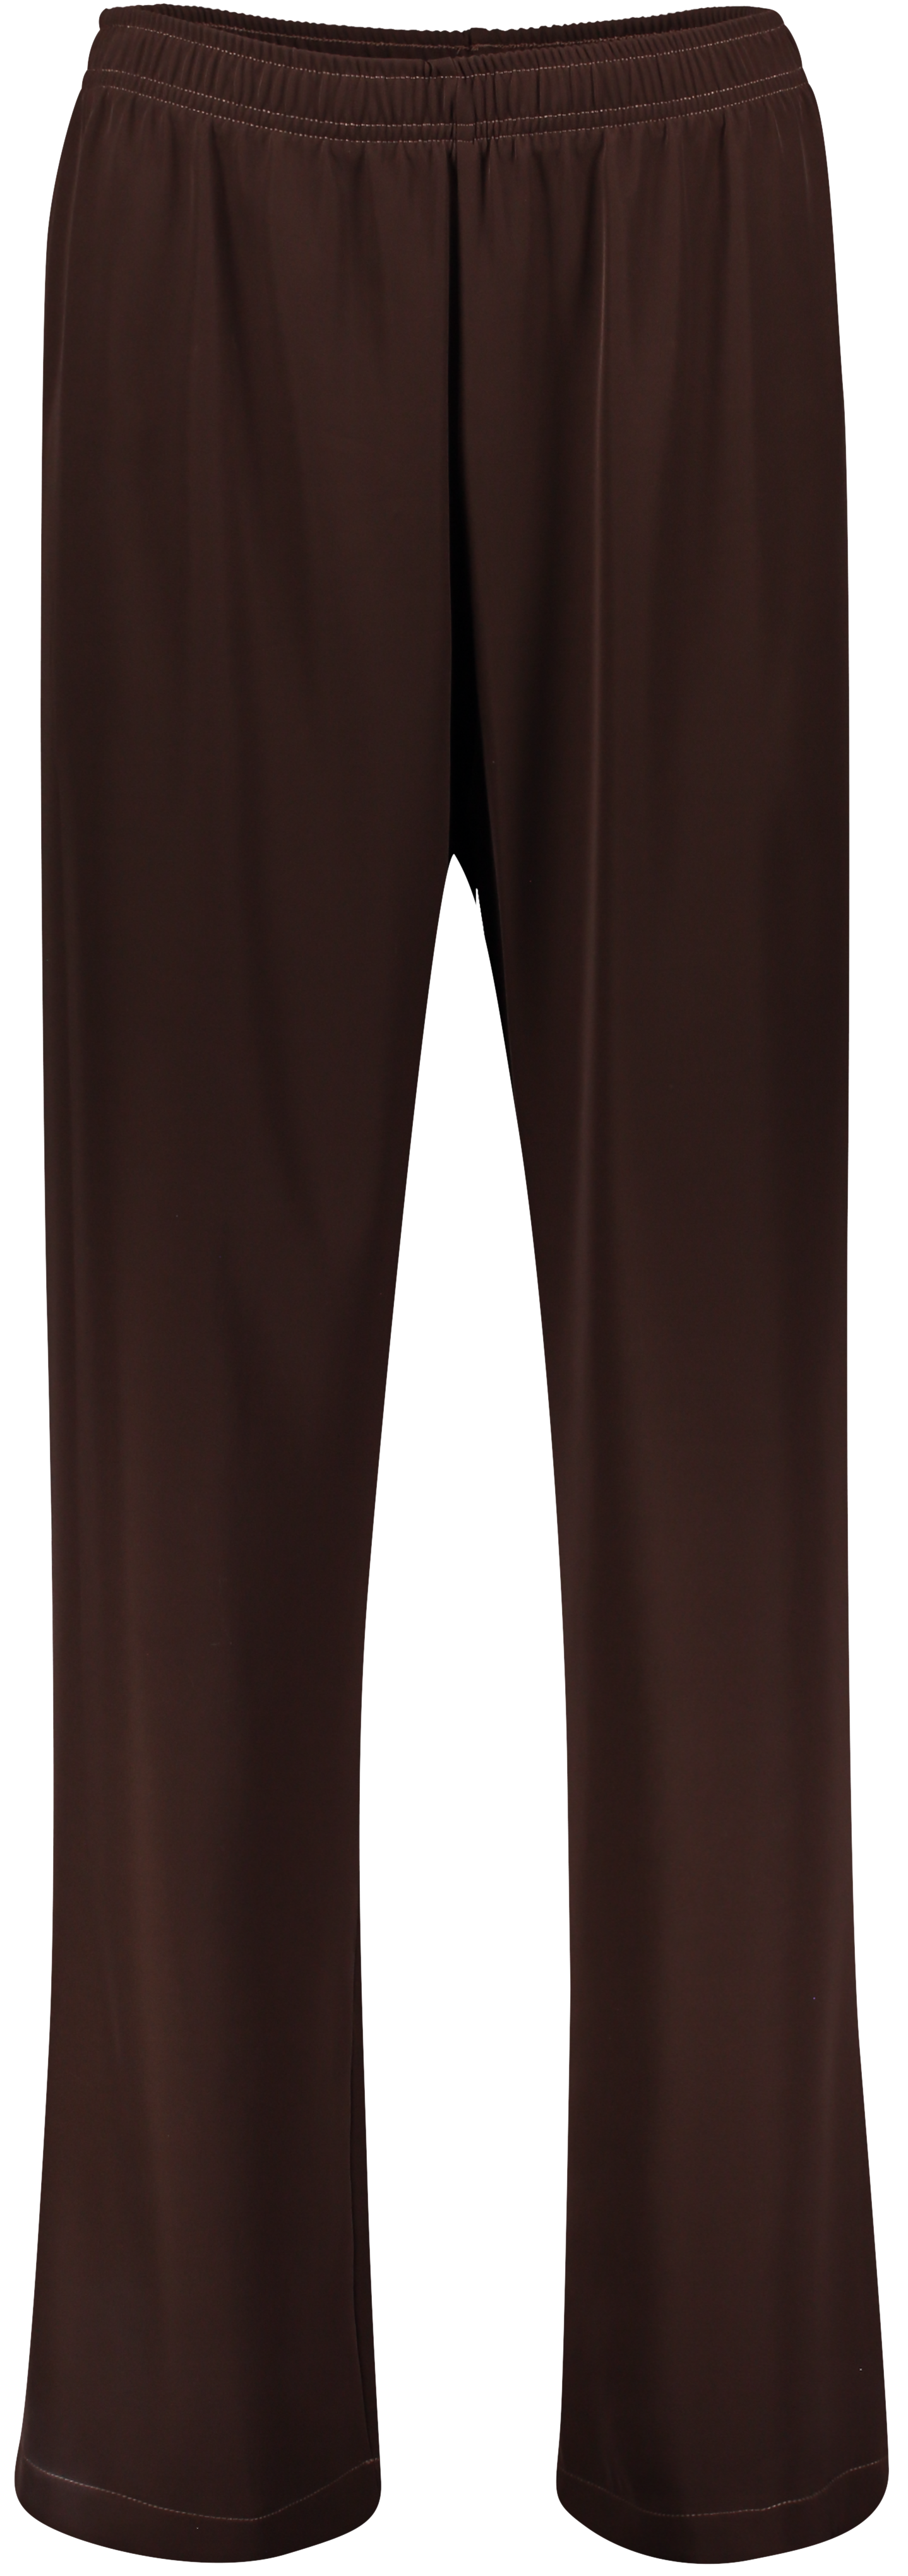 Trousers PVT3DAO 1834 Ebano